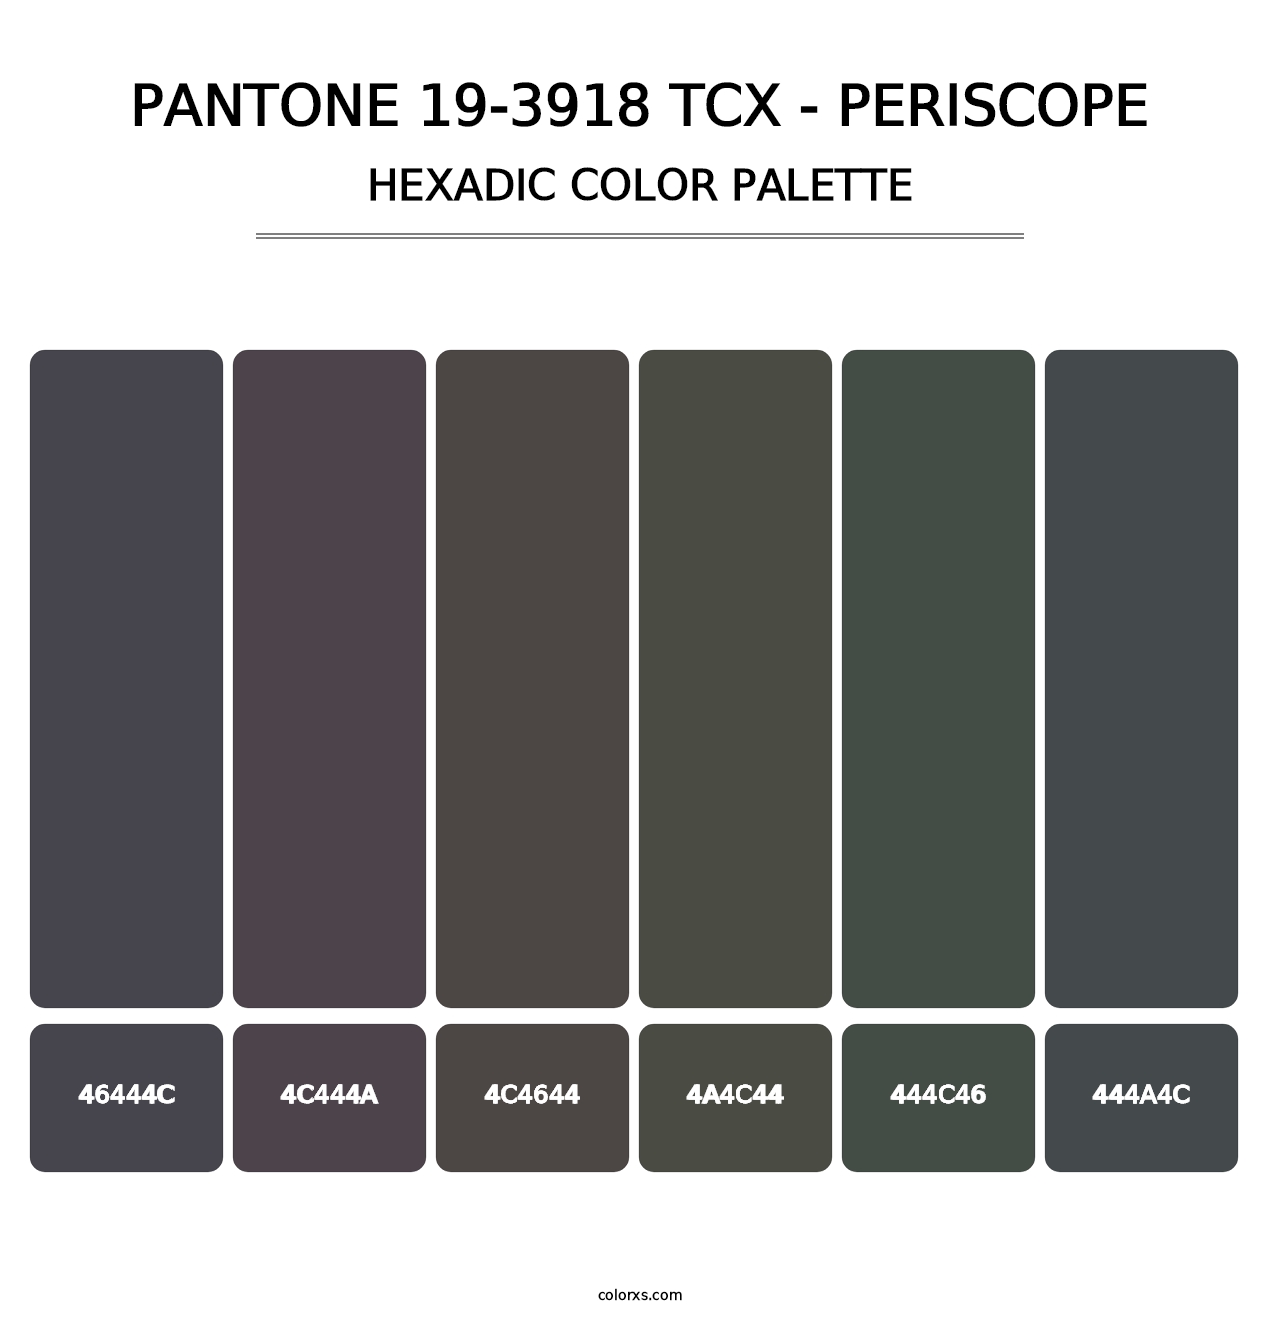 PANTONE 19-3918 TCX - Periscope - Hexadic Color Palette